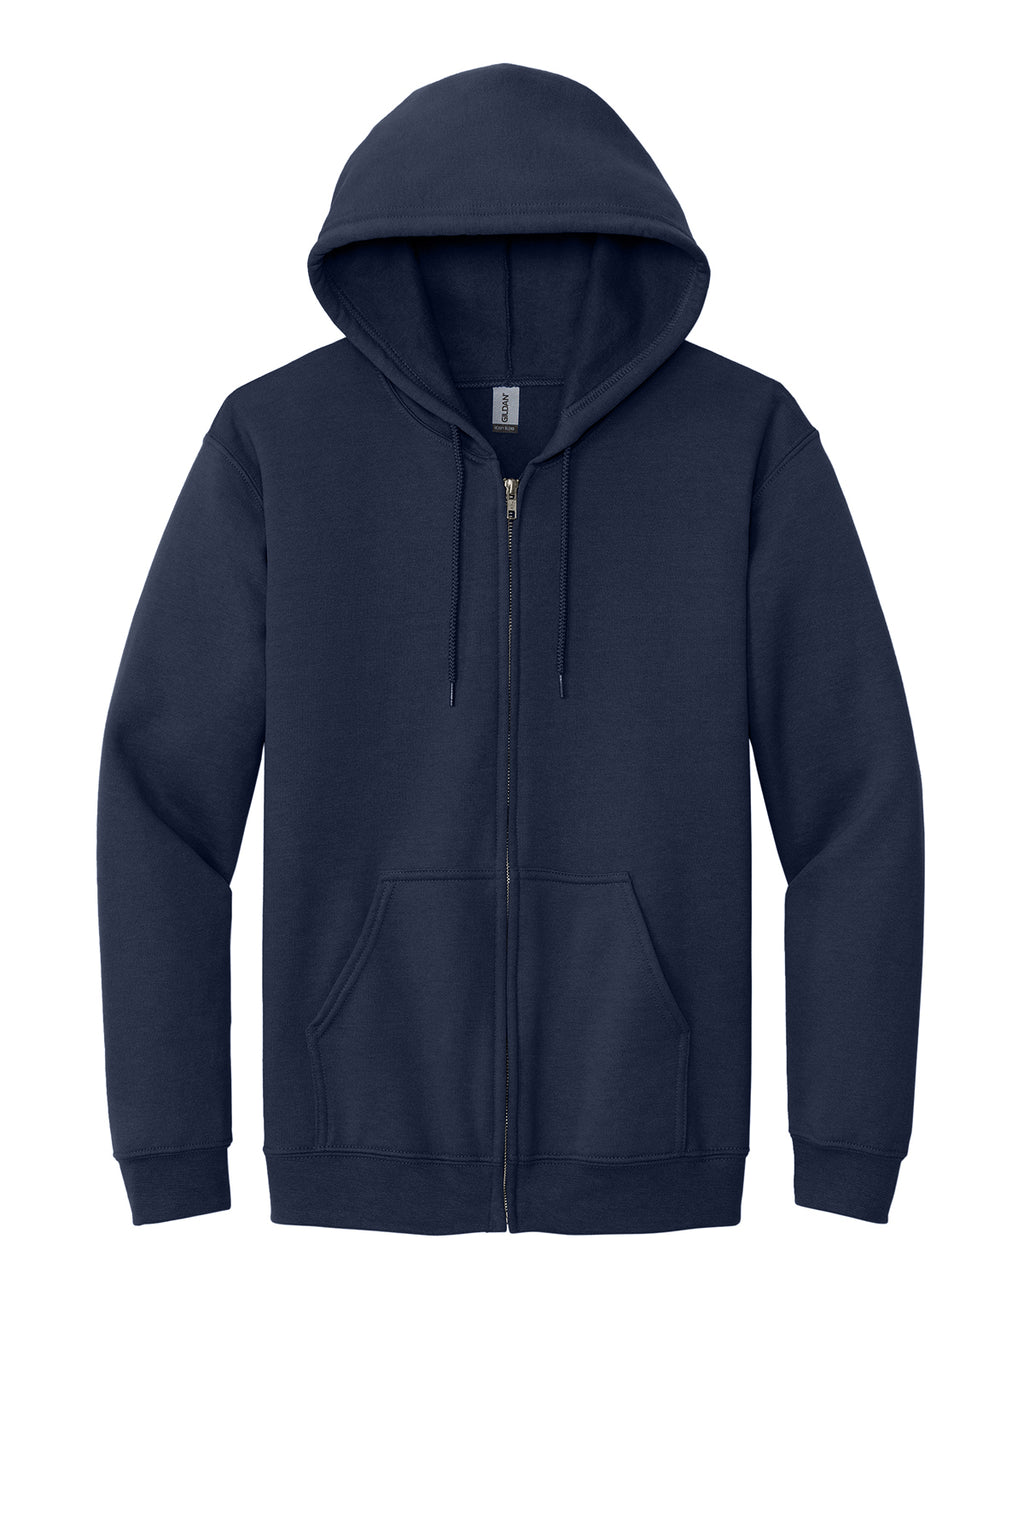 Gildan Full-Zip Hooded Sweatshirt Mens/Unisex Hoodies Navy